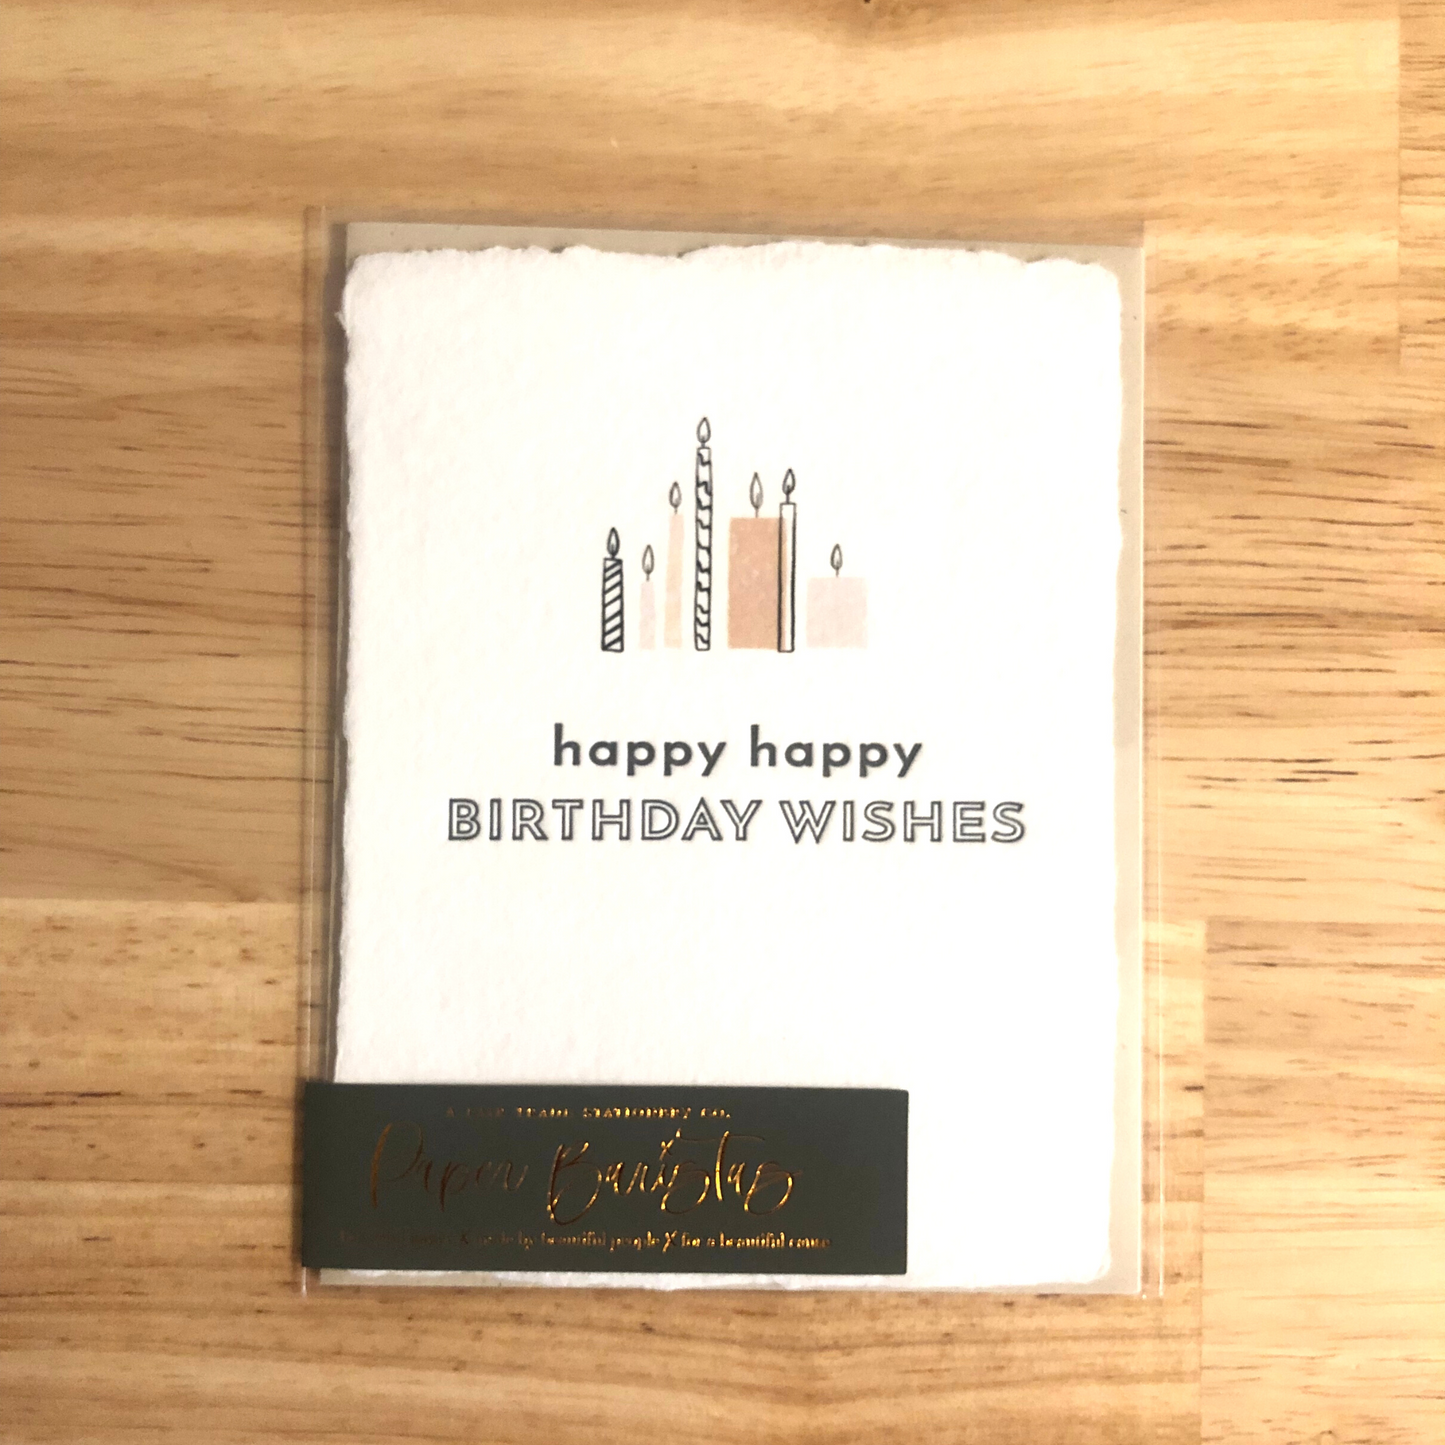 Handmade Birthday Card- "Happy Happy Birthday Wishes"